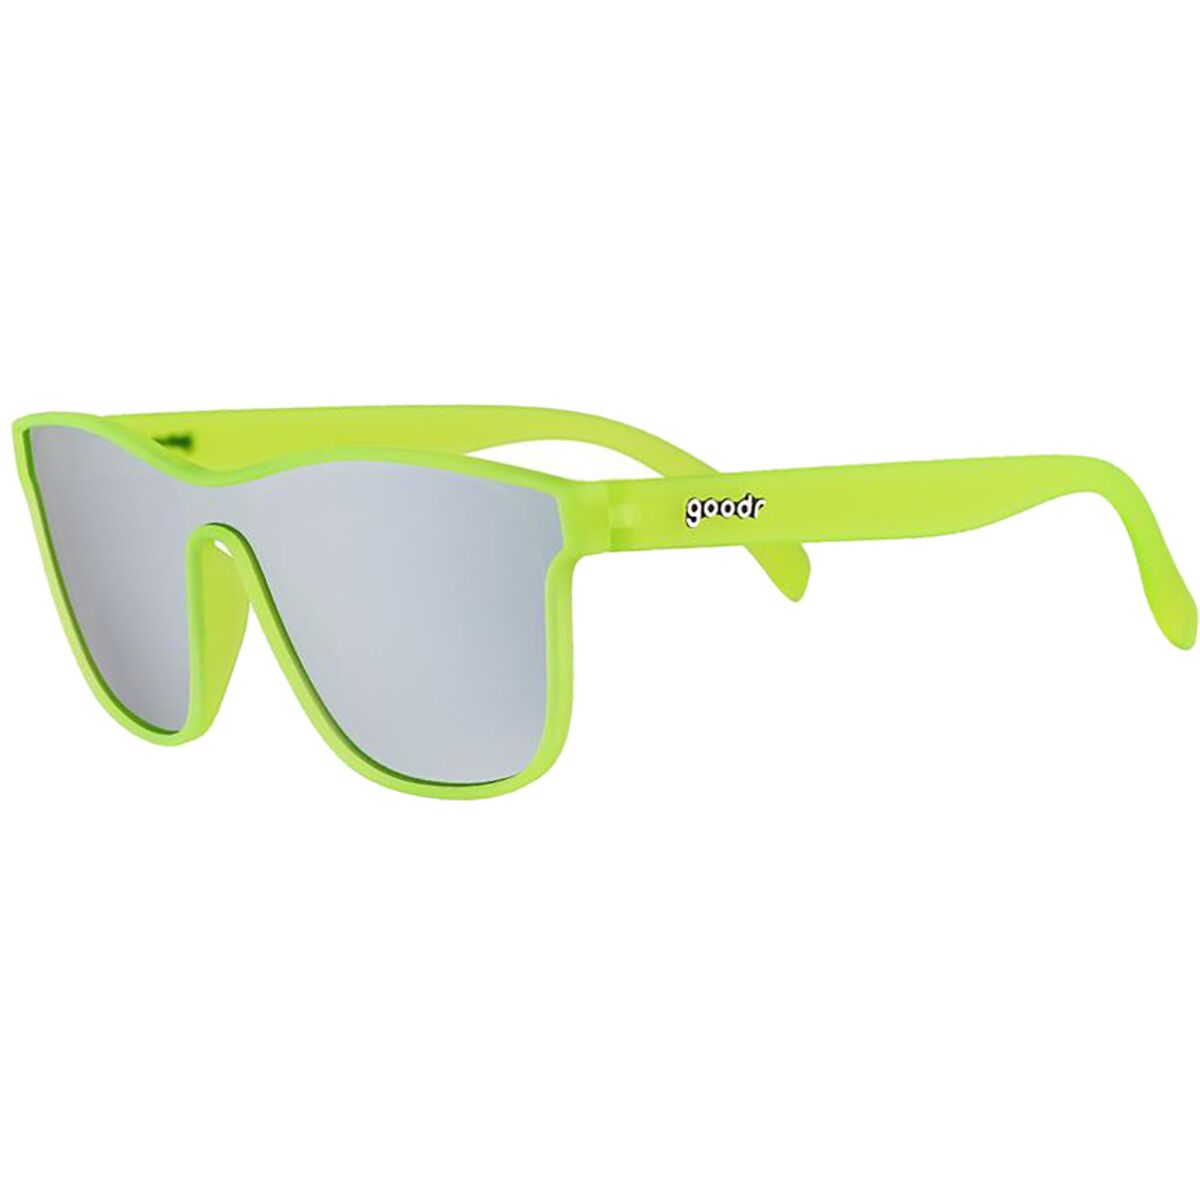 Goodr VRG Polarized Sunglasses